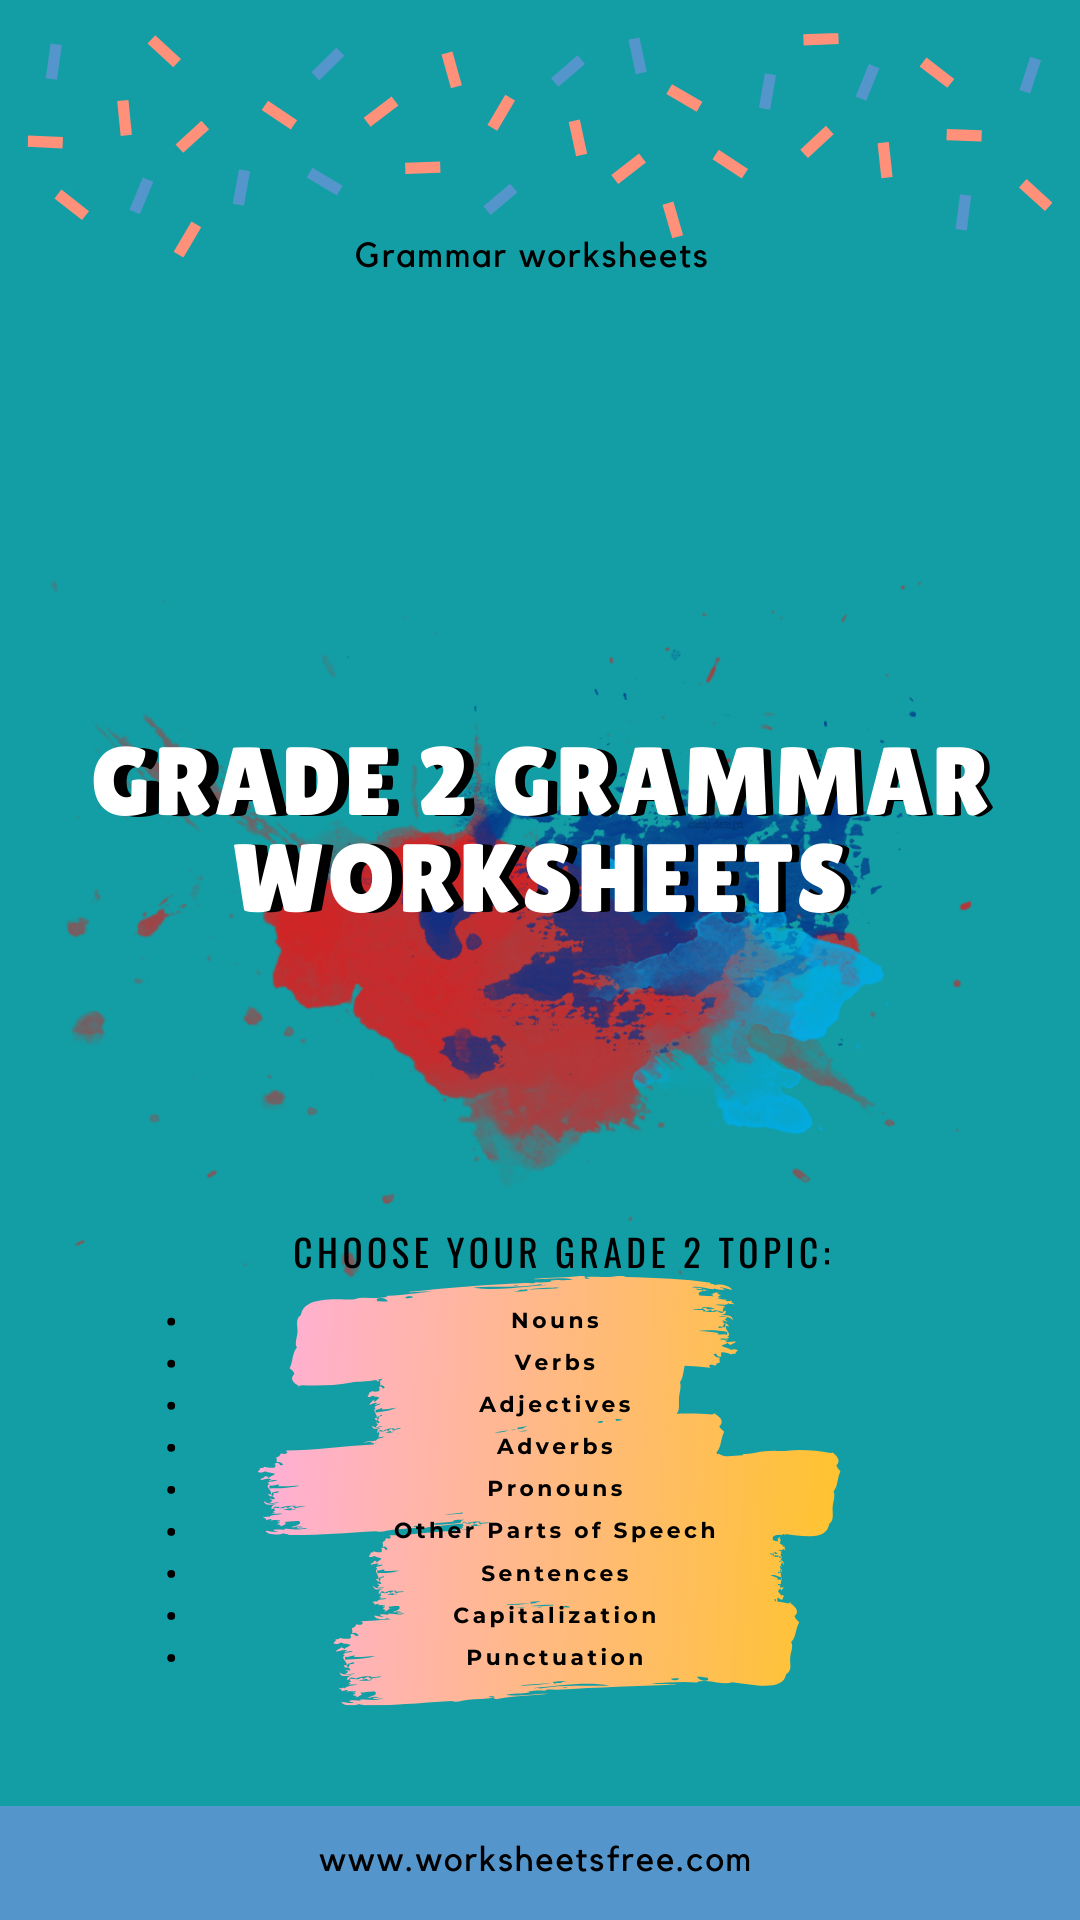 Grammar And Usage Pronouns Worksheet Grade 2 Pronoun Worksheet In 2020 With Images Pronoun